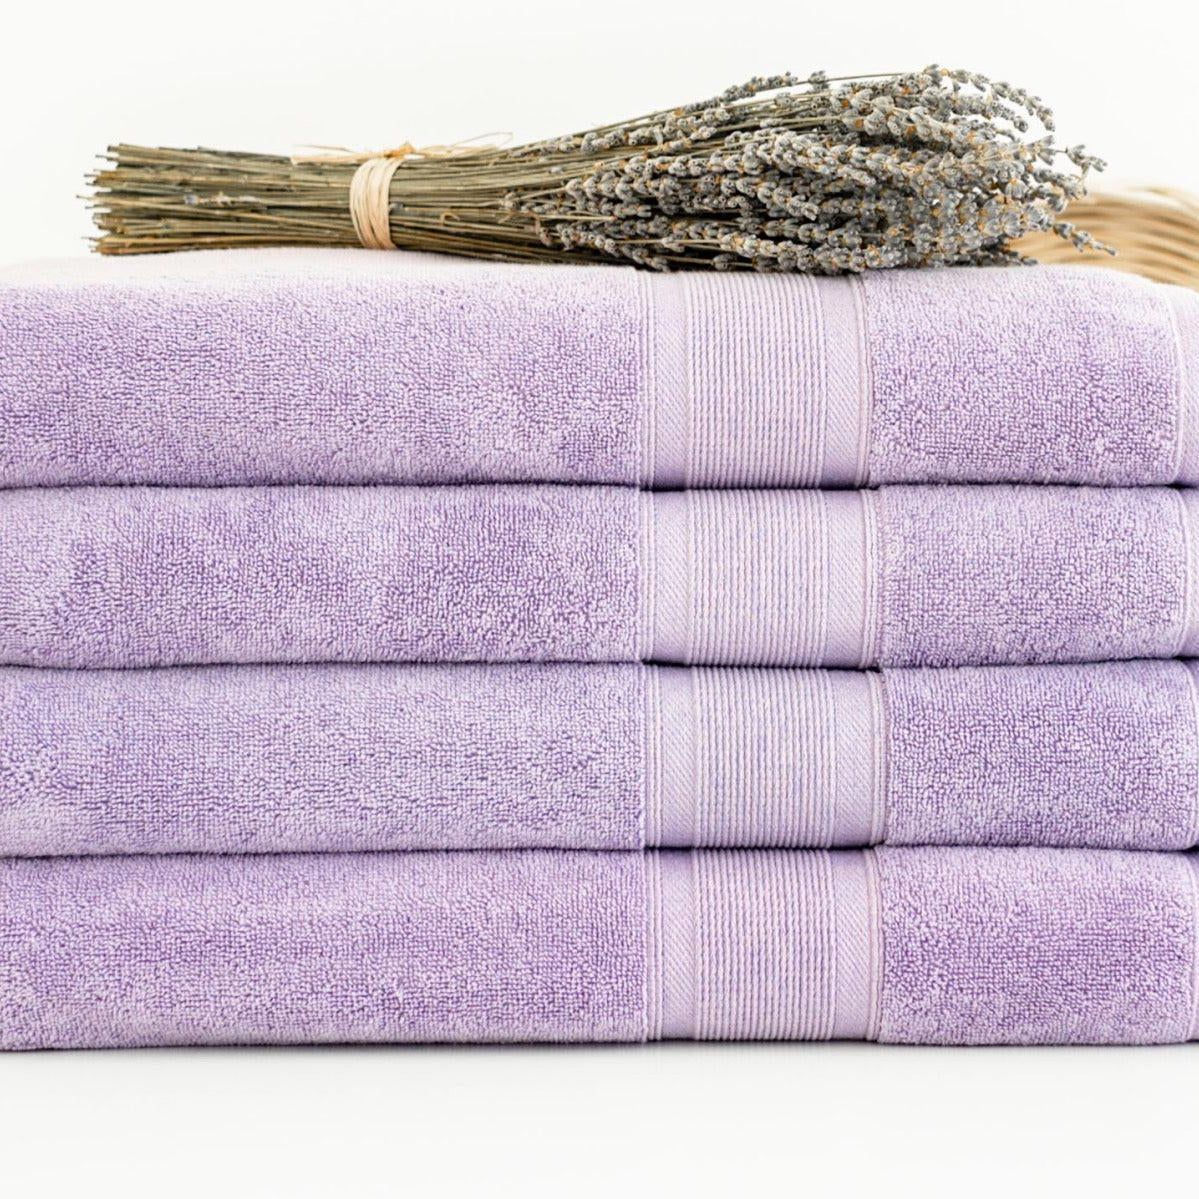 Premium Turkish Cotton Lavender Towels